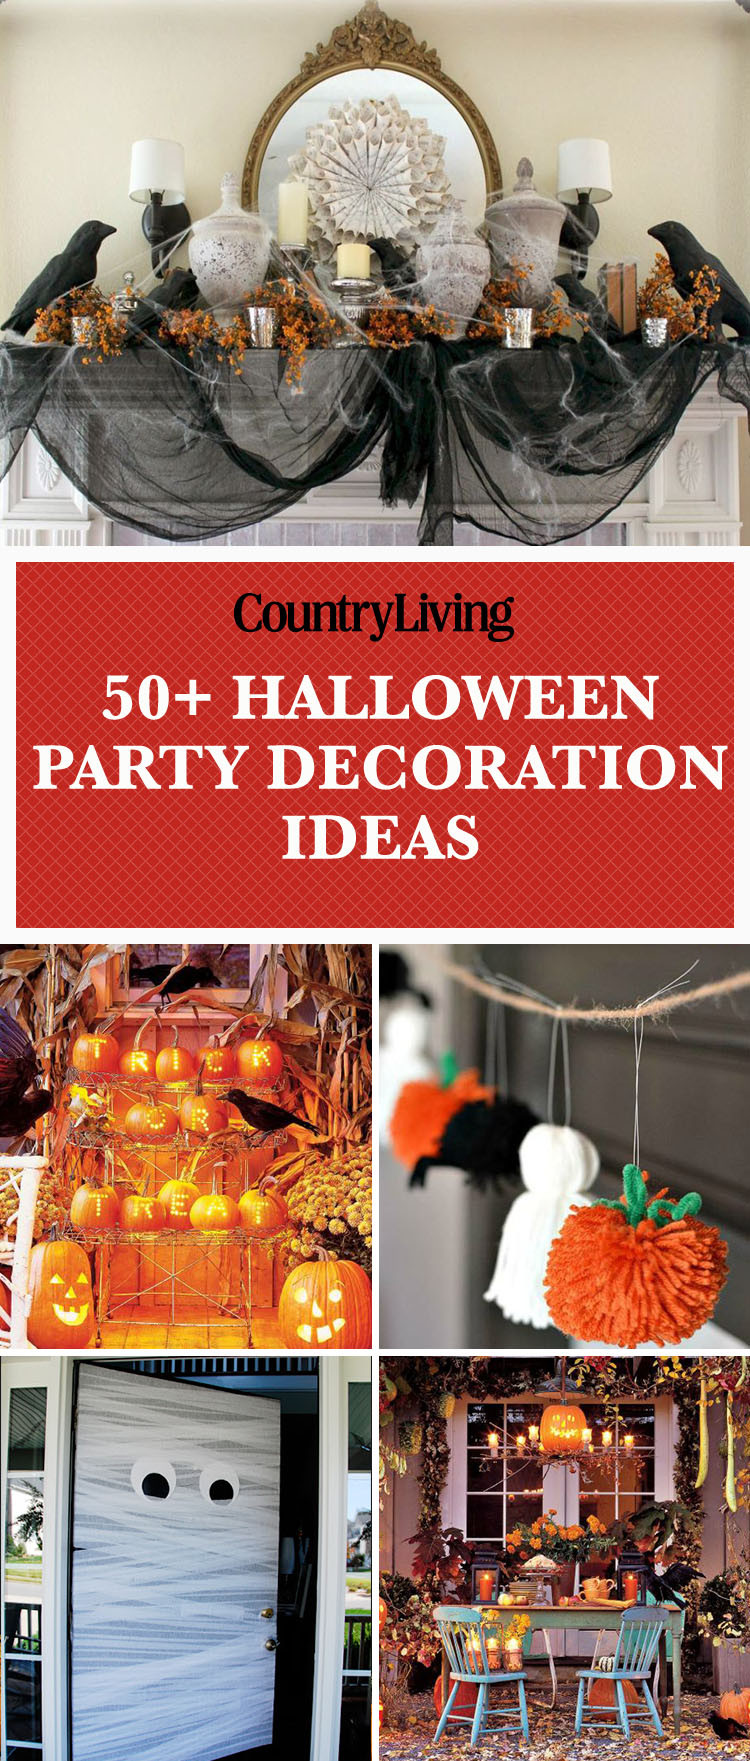 Scary Halloween Party Decoration Ideas
 56 Fun Halloween Party Decorating Ideas Spooky Halloween